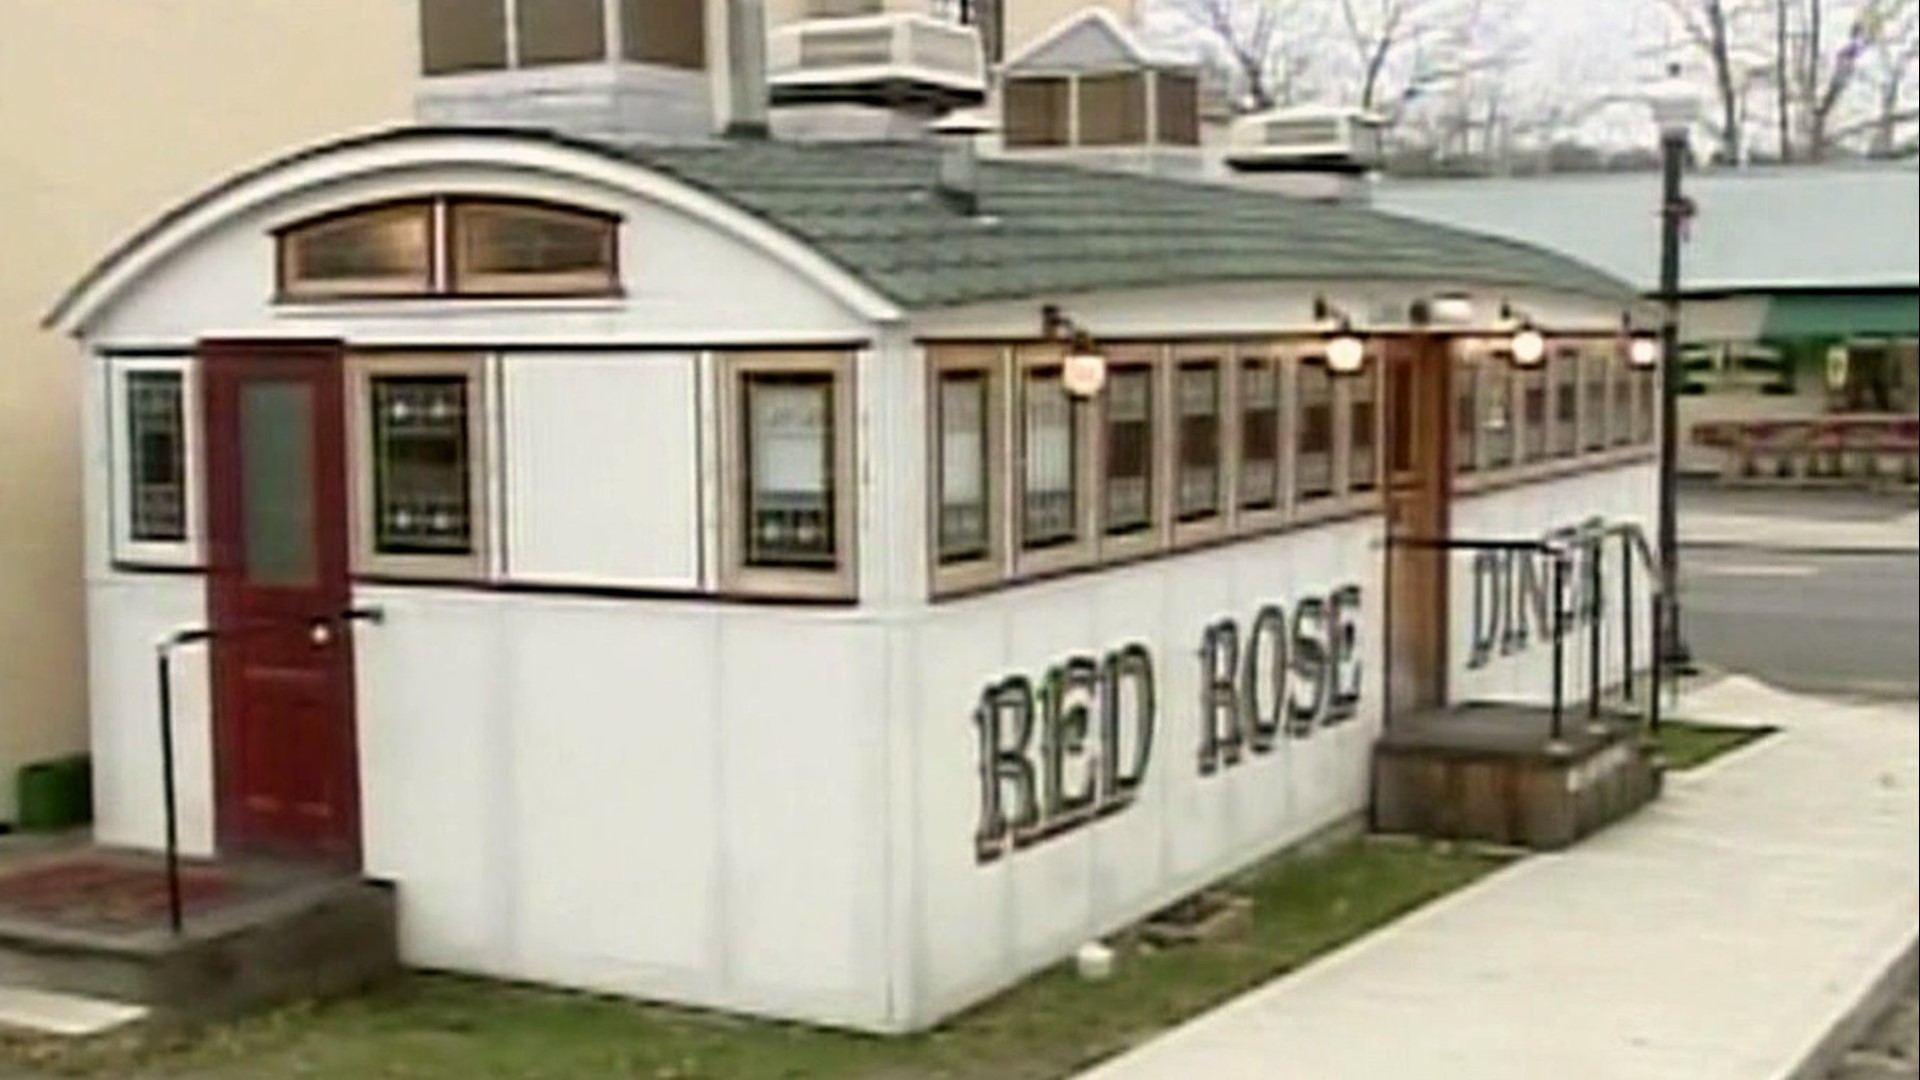 The Red Rose Diner